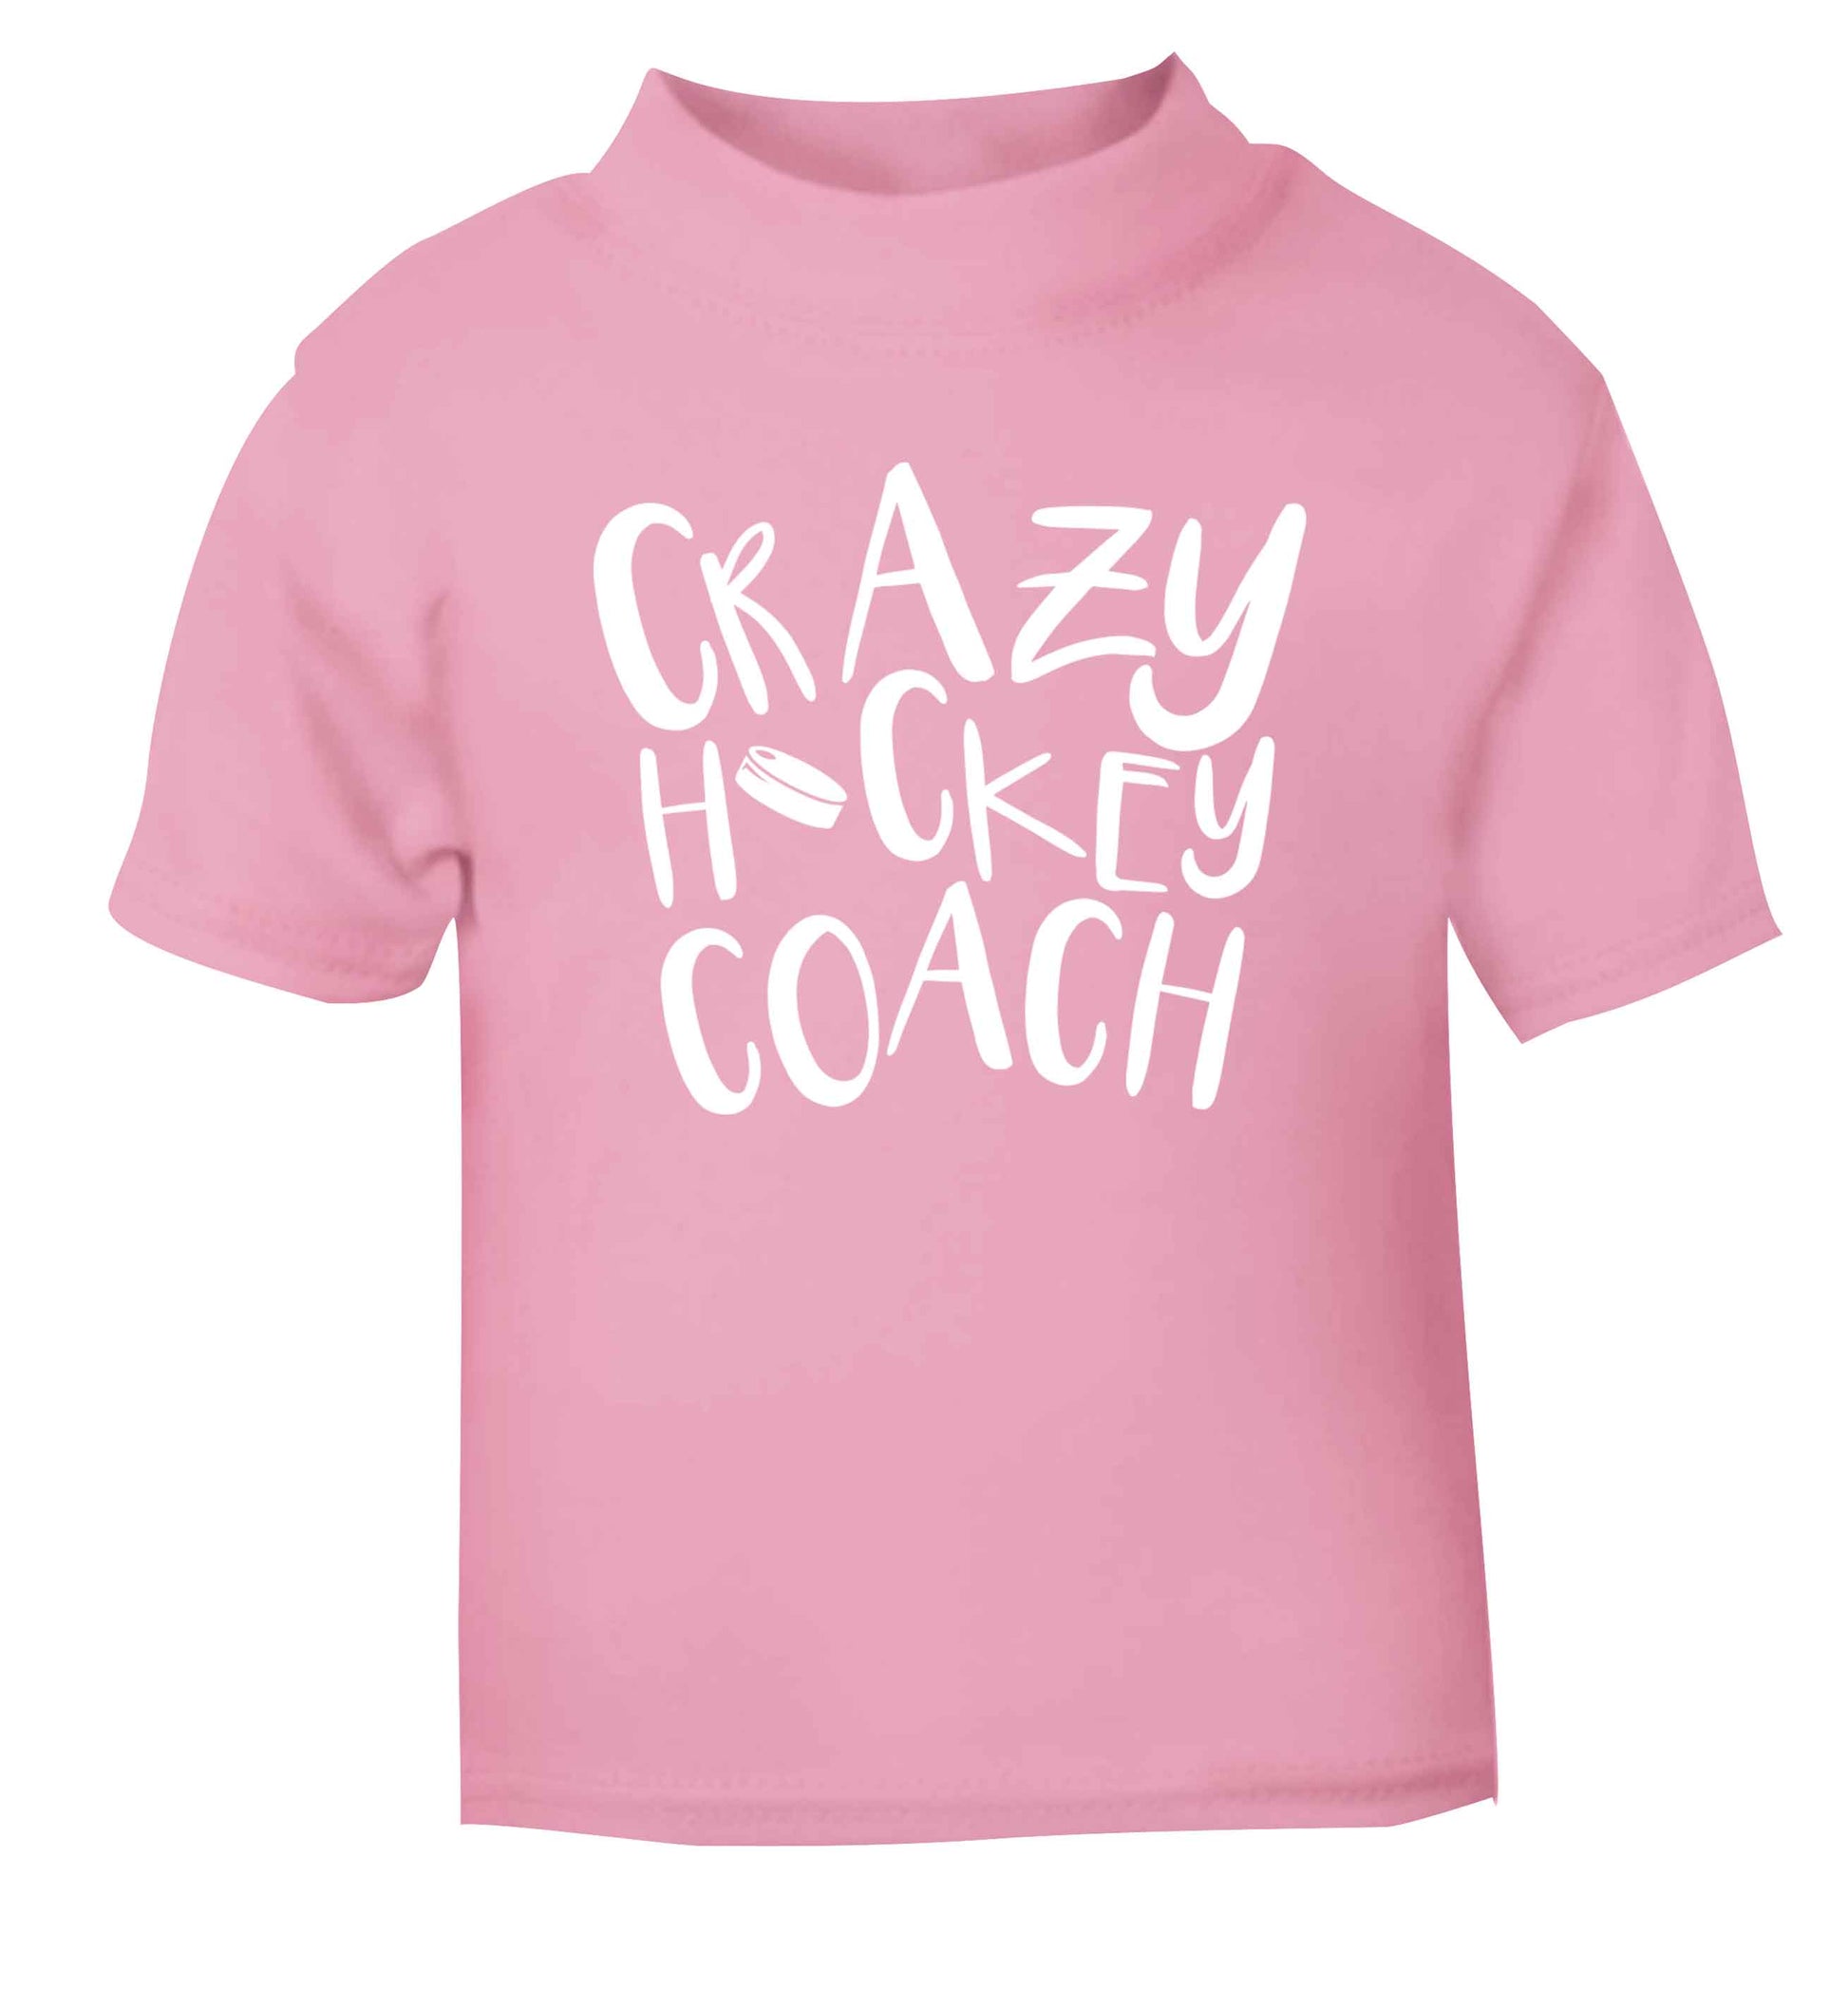 Crazy hockey coach light pink Baby Toddler Tshirt 2 Years